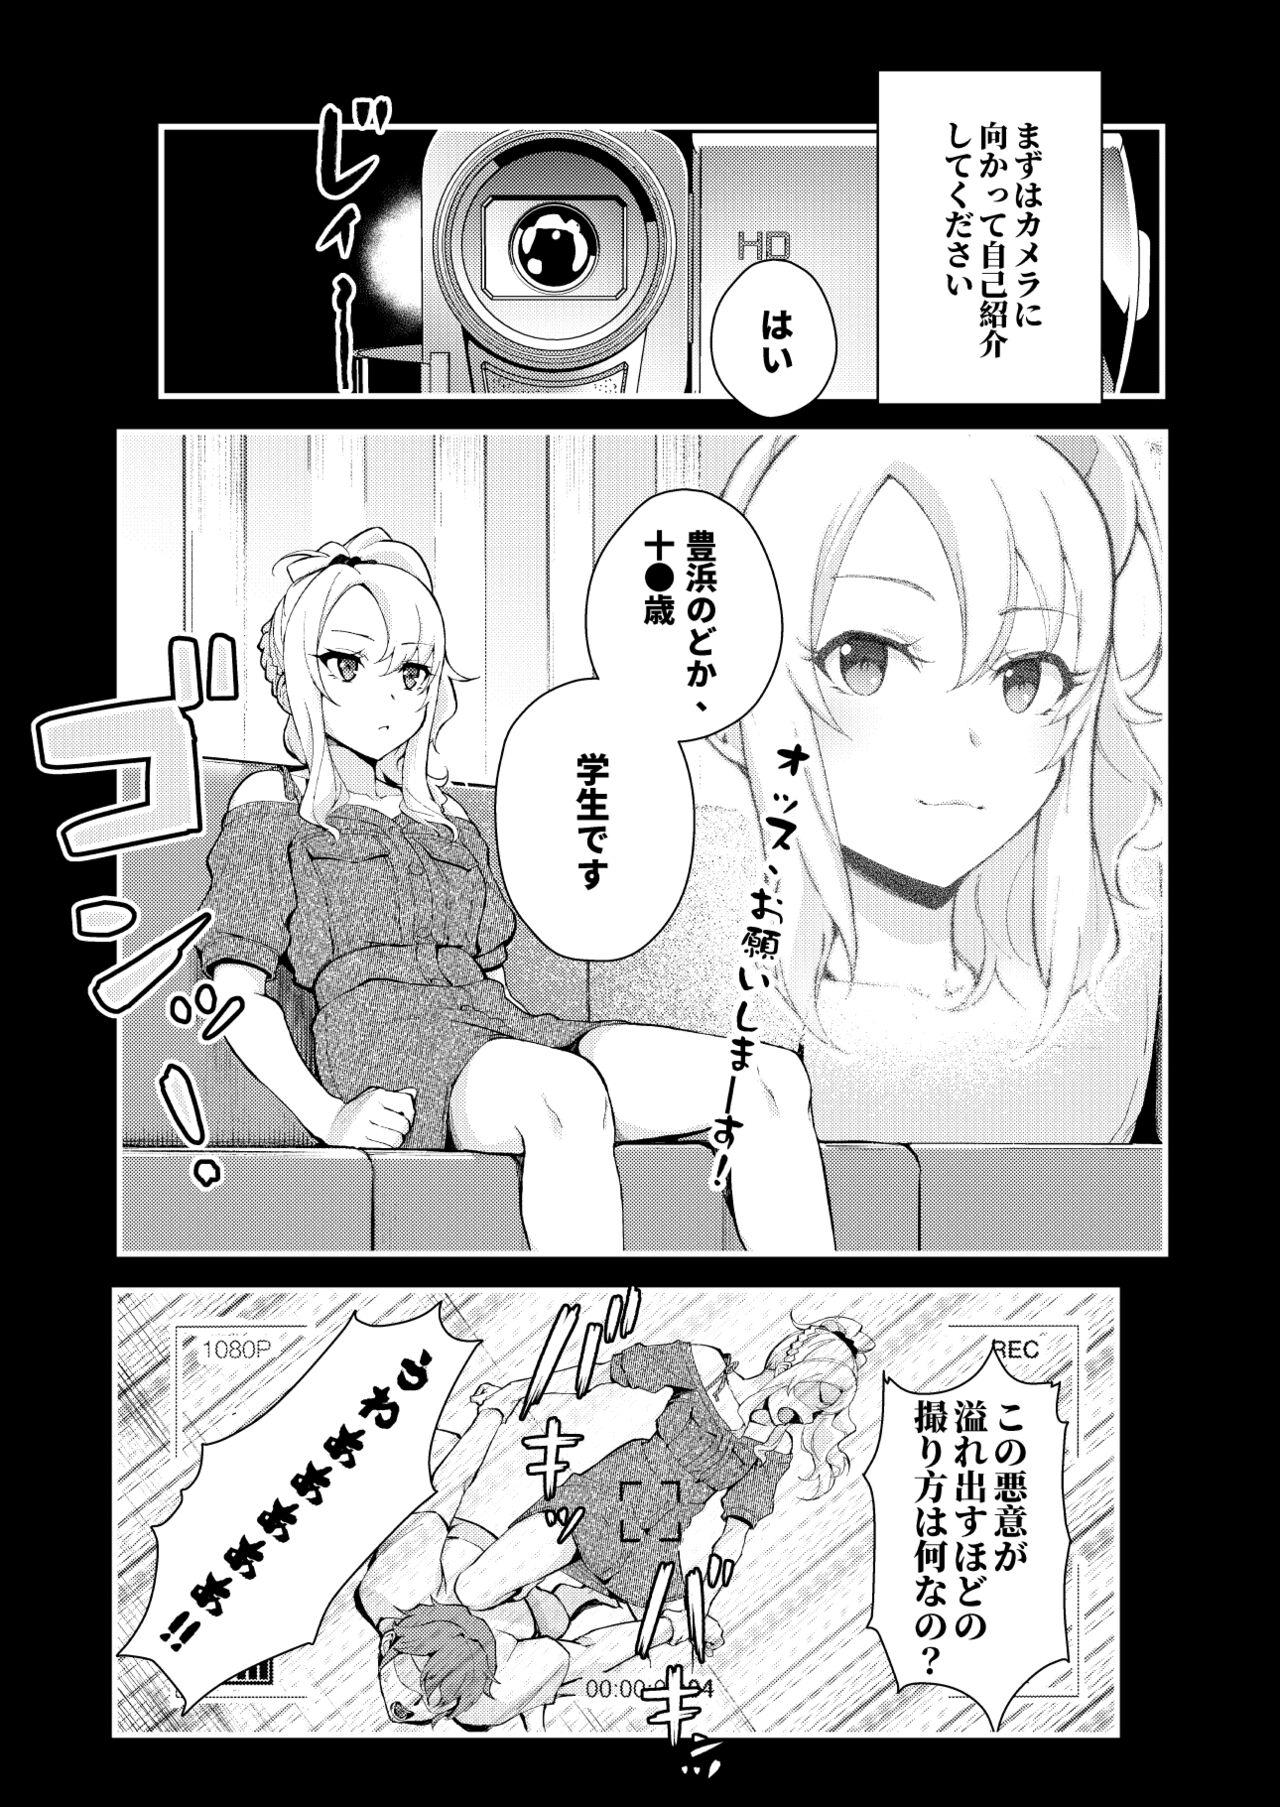 Couple Sisters Panic - Seishun buta yarou wa bunny girl senpai no yume o minai Nice - Page 2